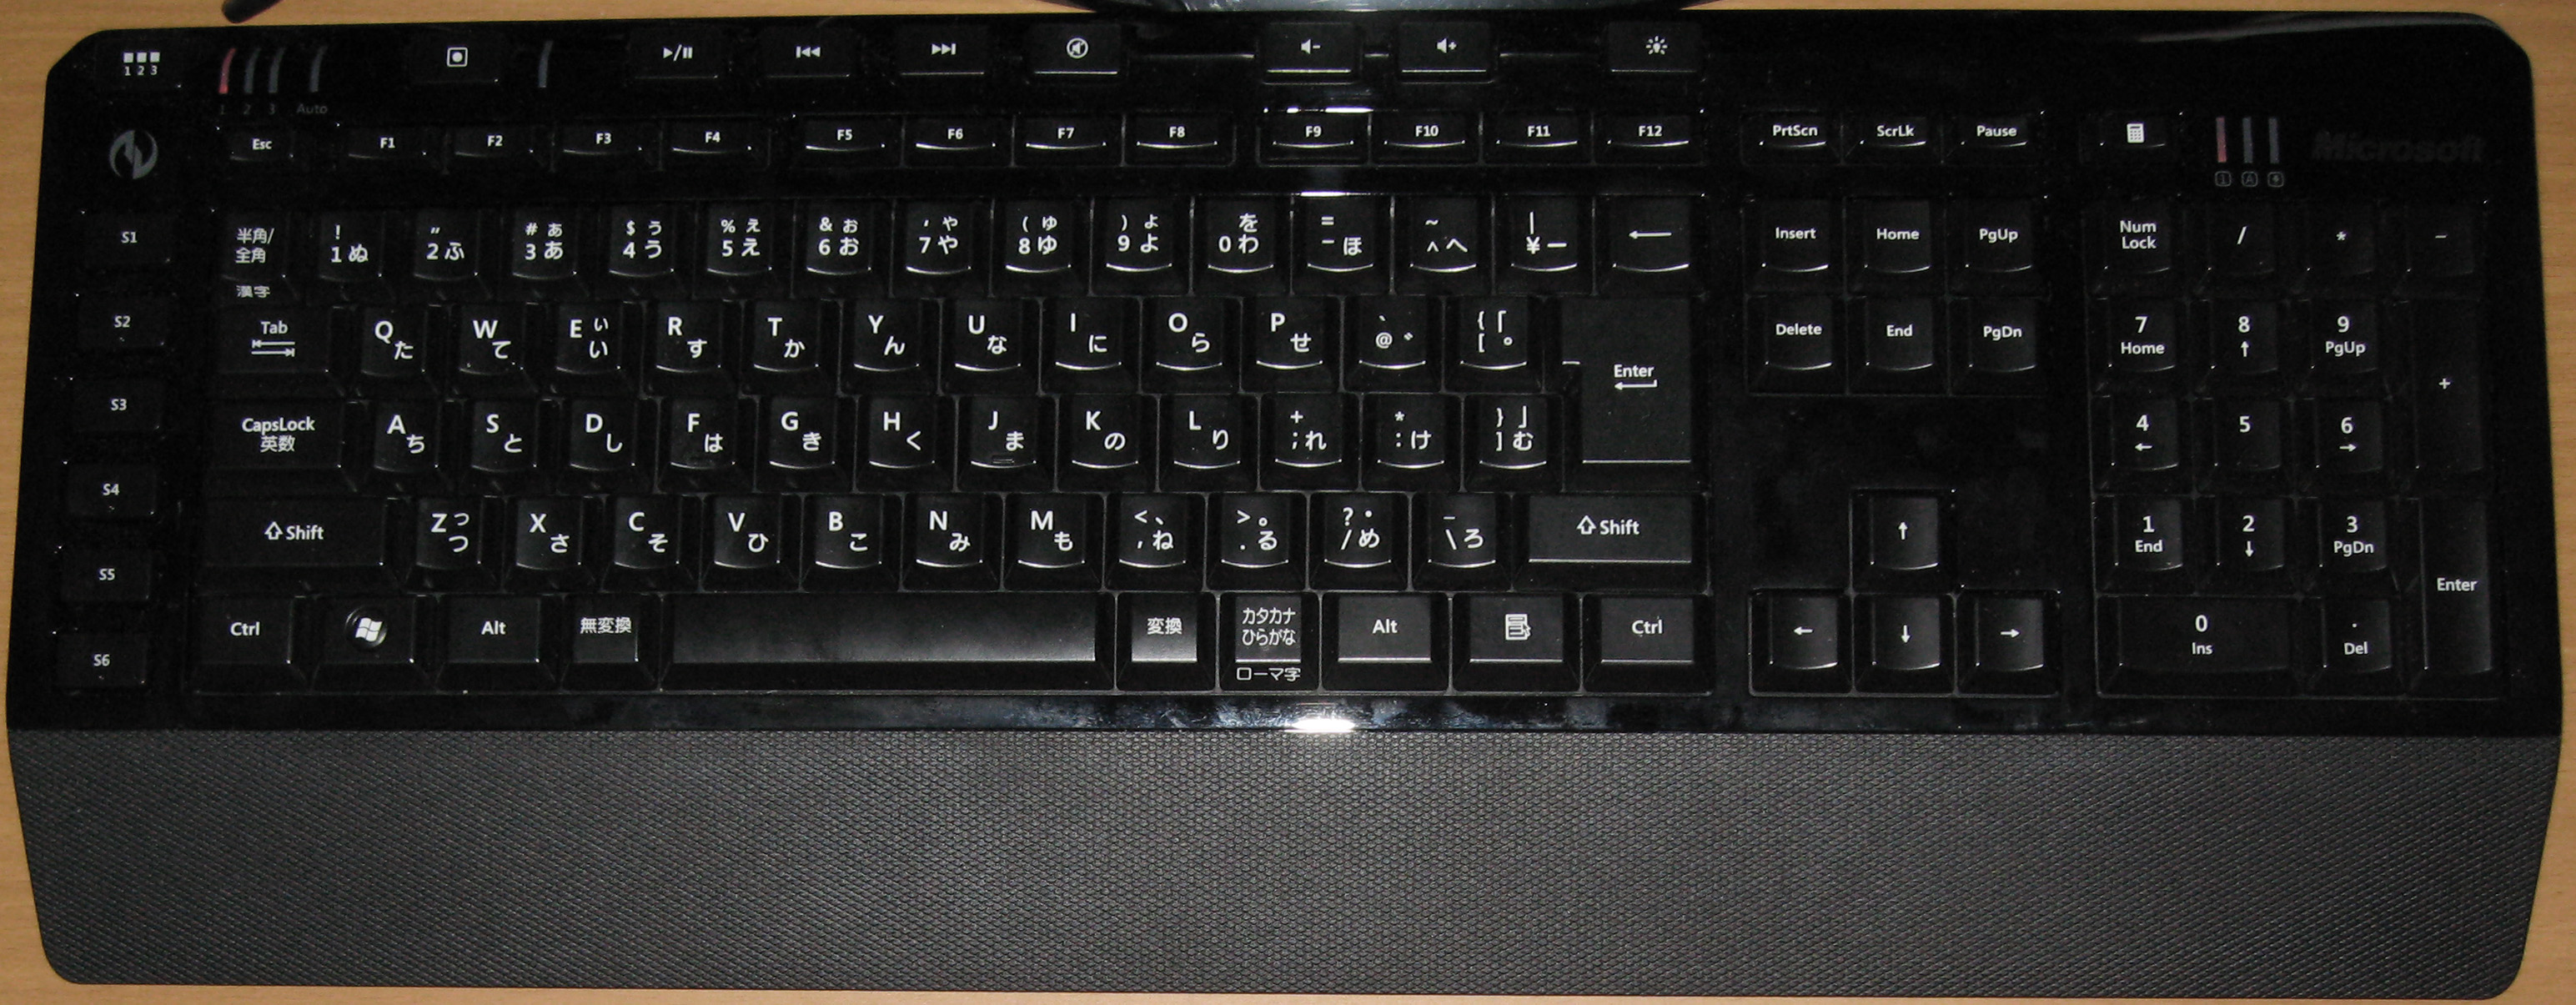 File:SideWinder X4 Keyboard Japanese.jpg - Wikipedia